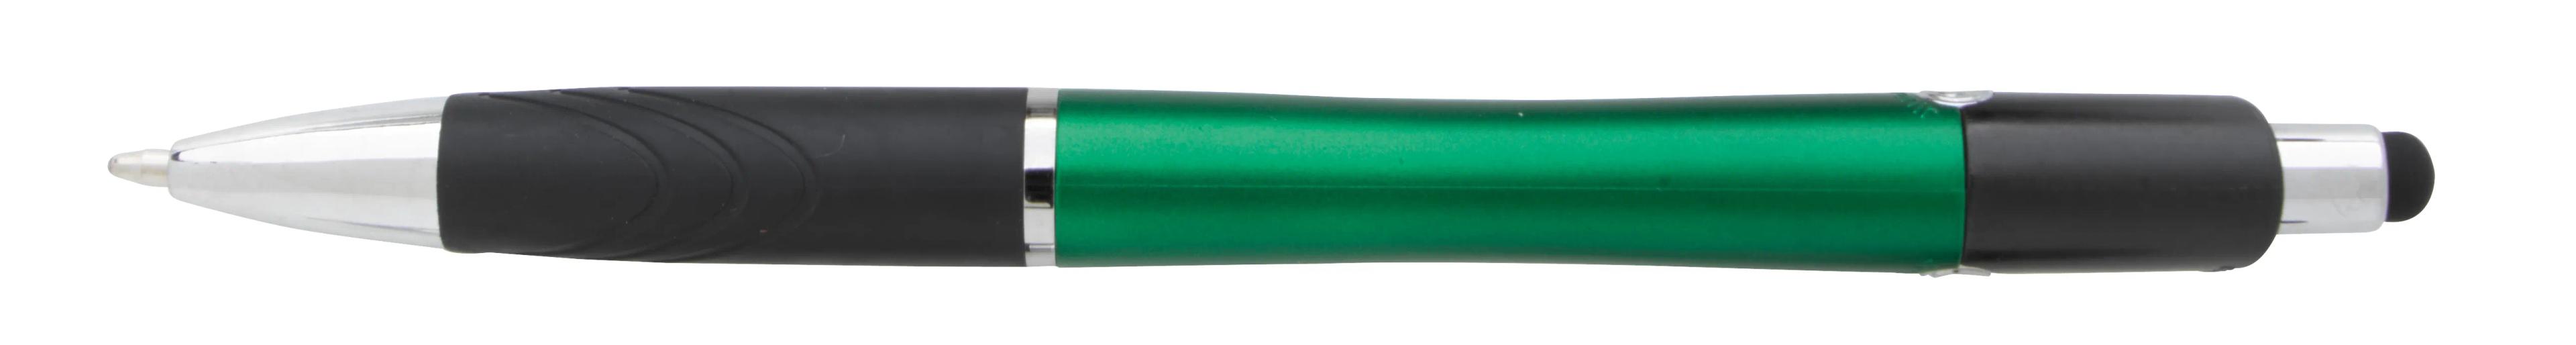 Souvenir® Emblem Stylus Pen 19 of 37